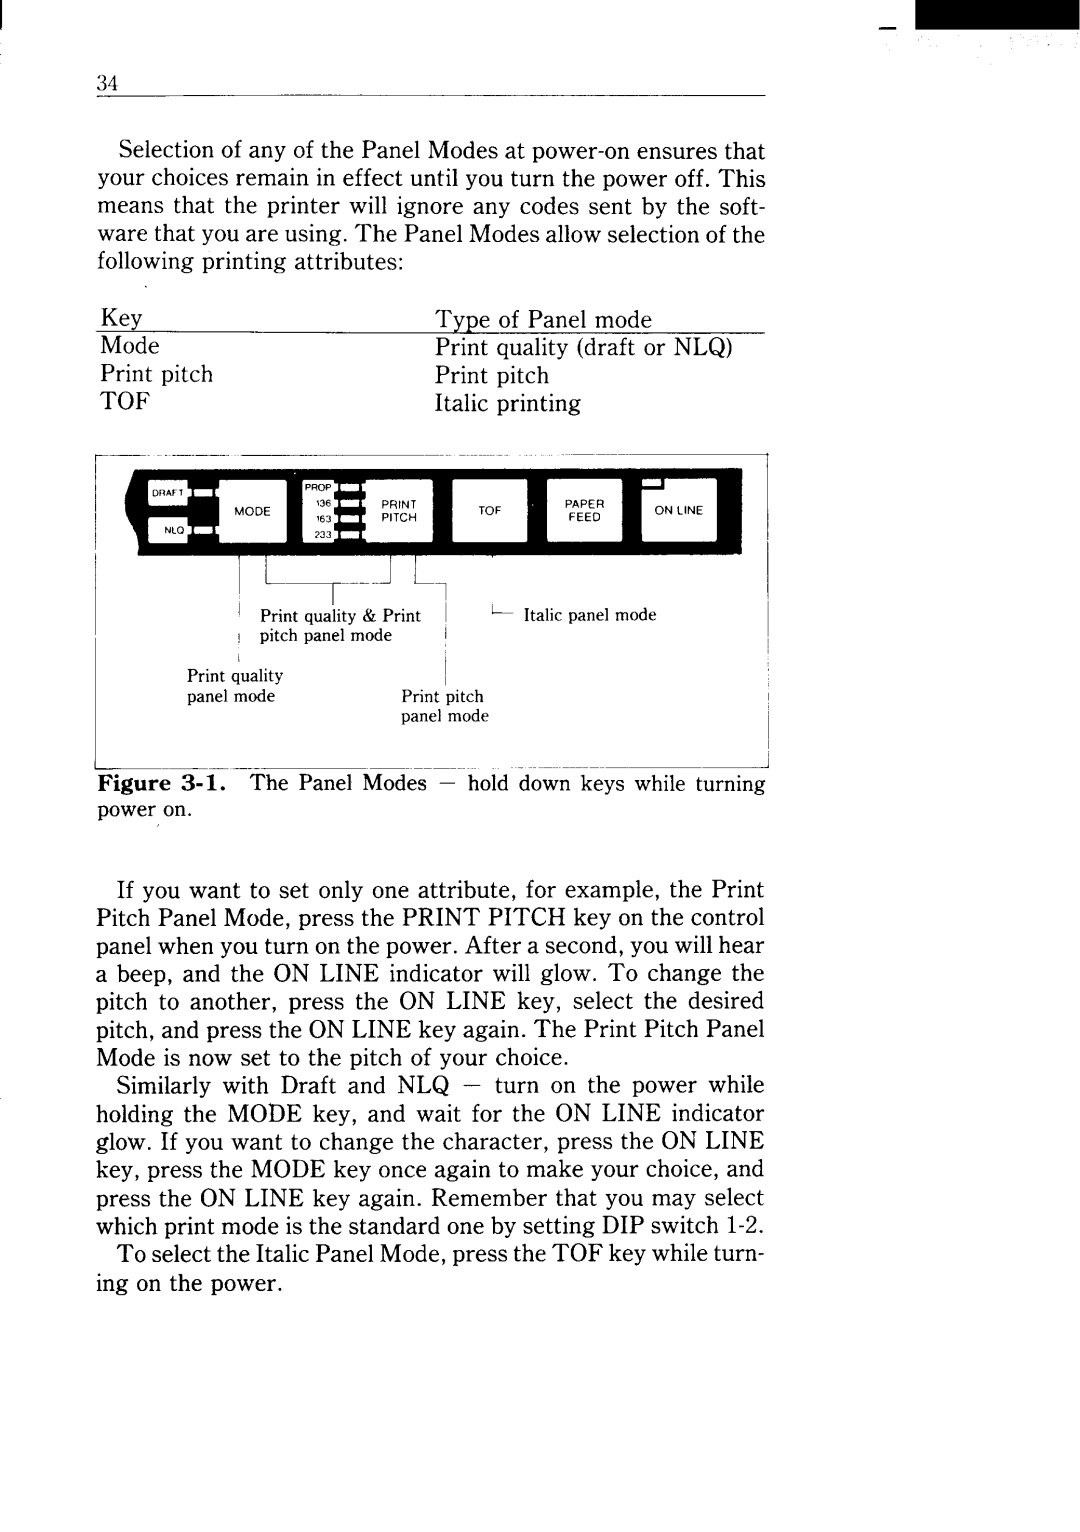 Star Micronics NX-15 user manual Key Mode Print pitch TOF 